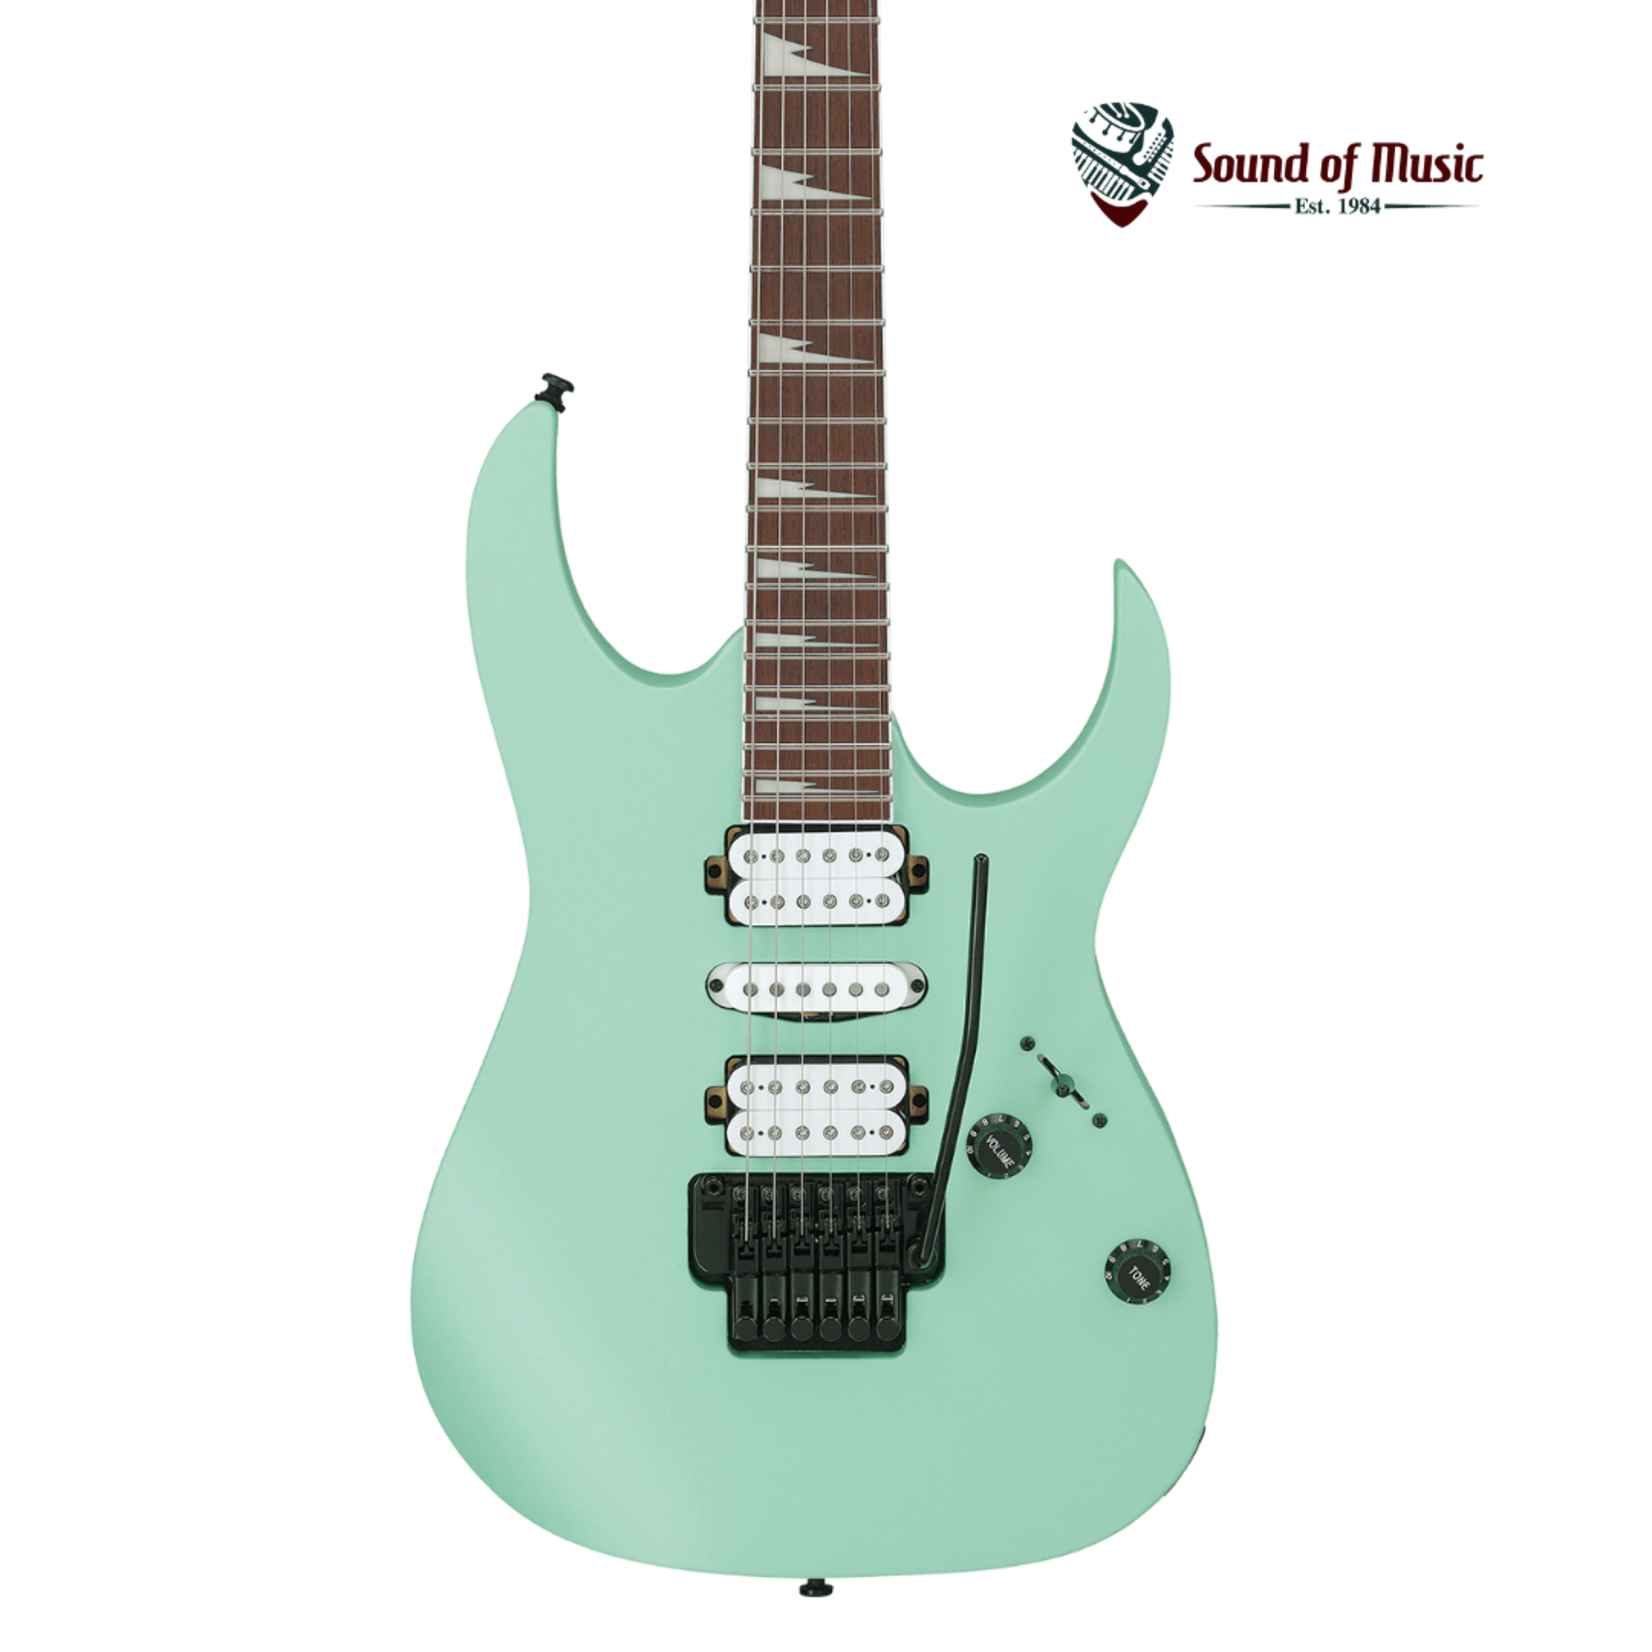 Ibanez RG470DX Electric Guitar - Sea Foam Green Matte